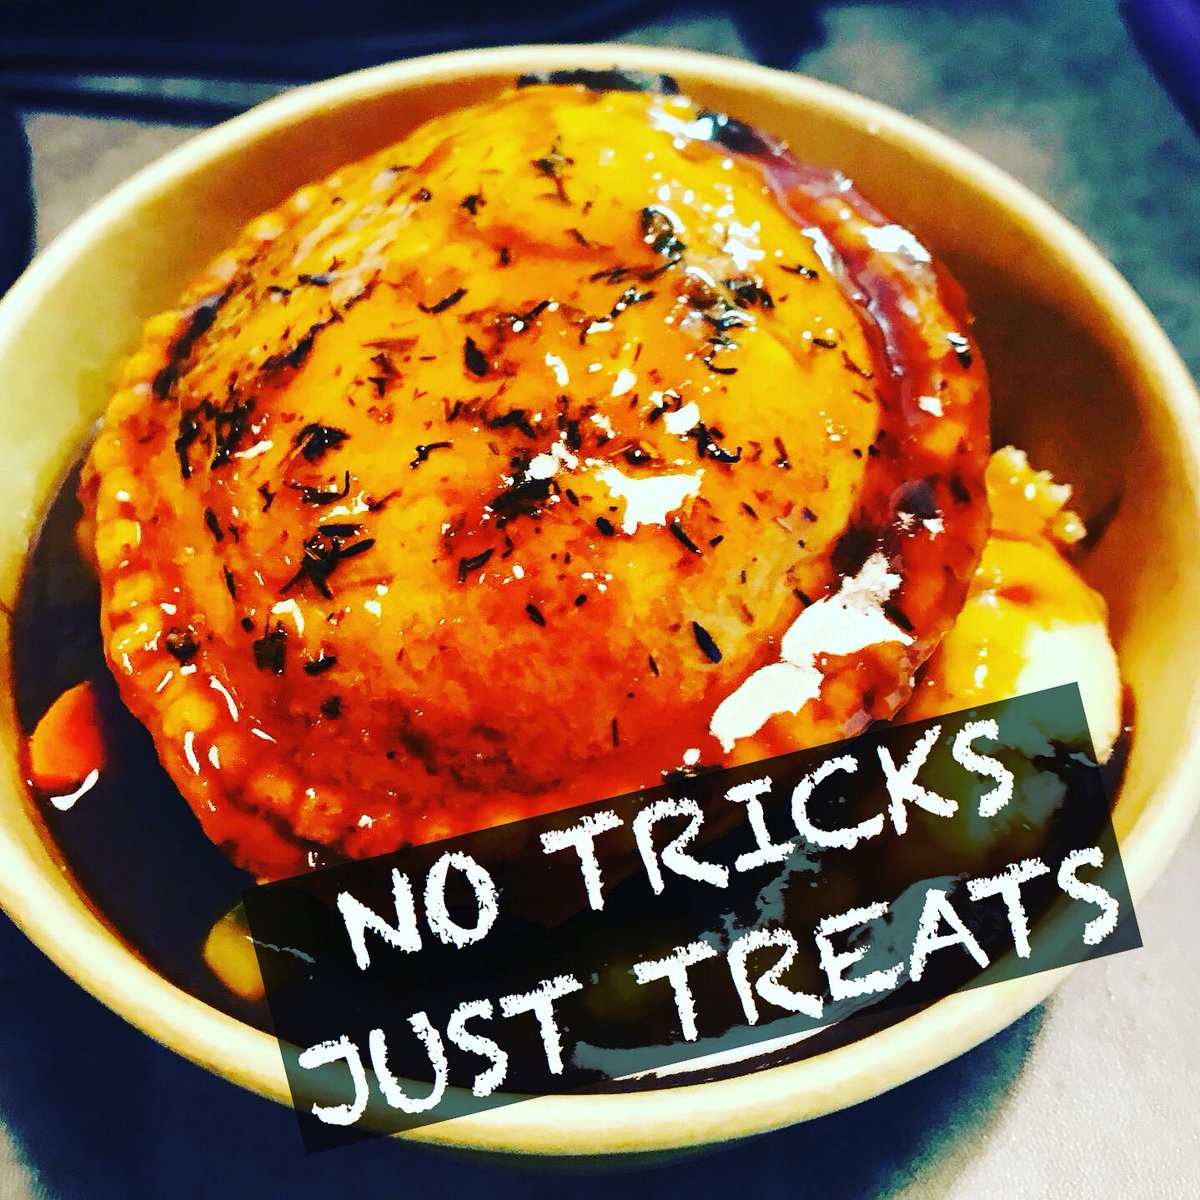 Sink your fangs into a pie meal at lunch 🥧 #HappyHalloween #NoTricksJustTreats @albertnorthmbr @salesfireuk @PublicitySeeker @TadWebSolutions @DigitalTeesside @SymbolDisplayUK @better_studio @CocoonAndBauer @carbondmp @hfcsystemsIT @hr_alchemy @ProjectEscapeUK @DundasShopping